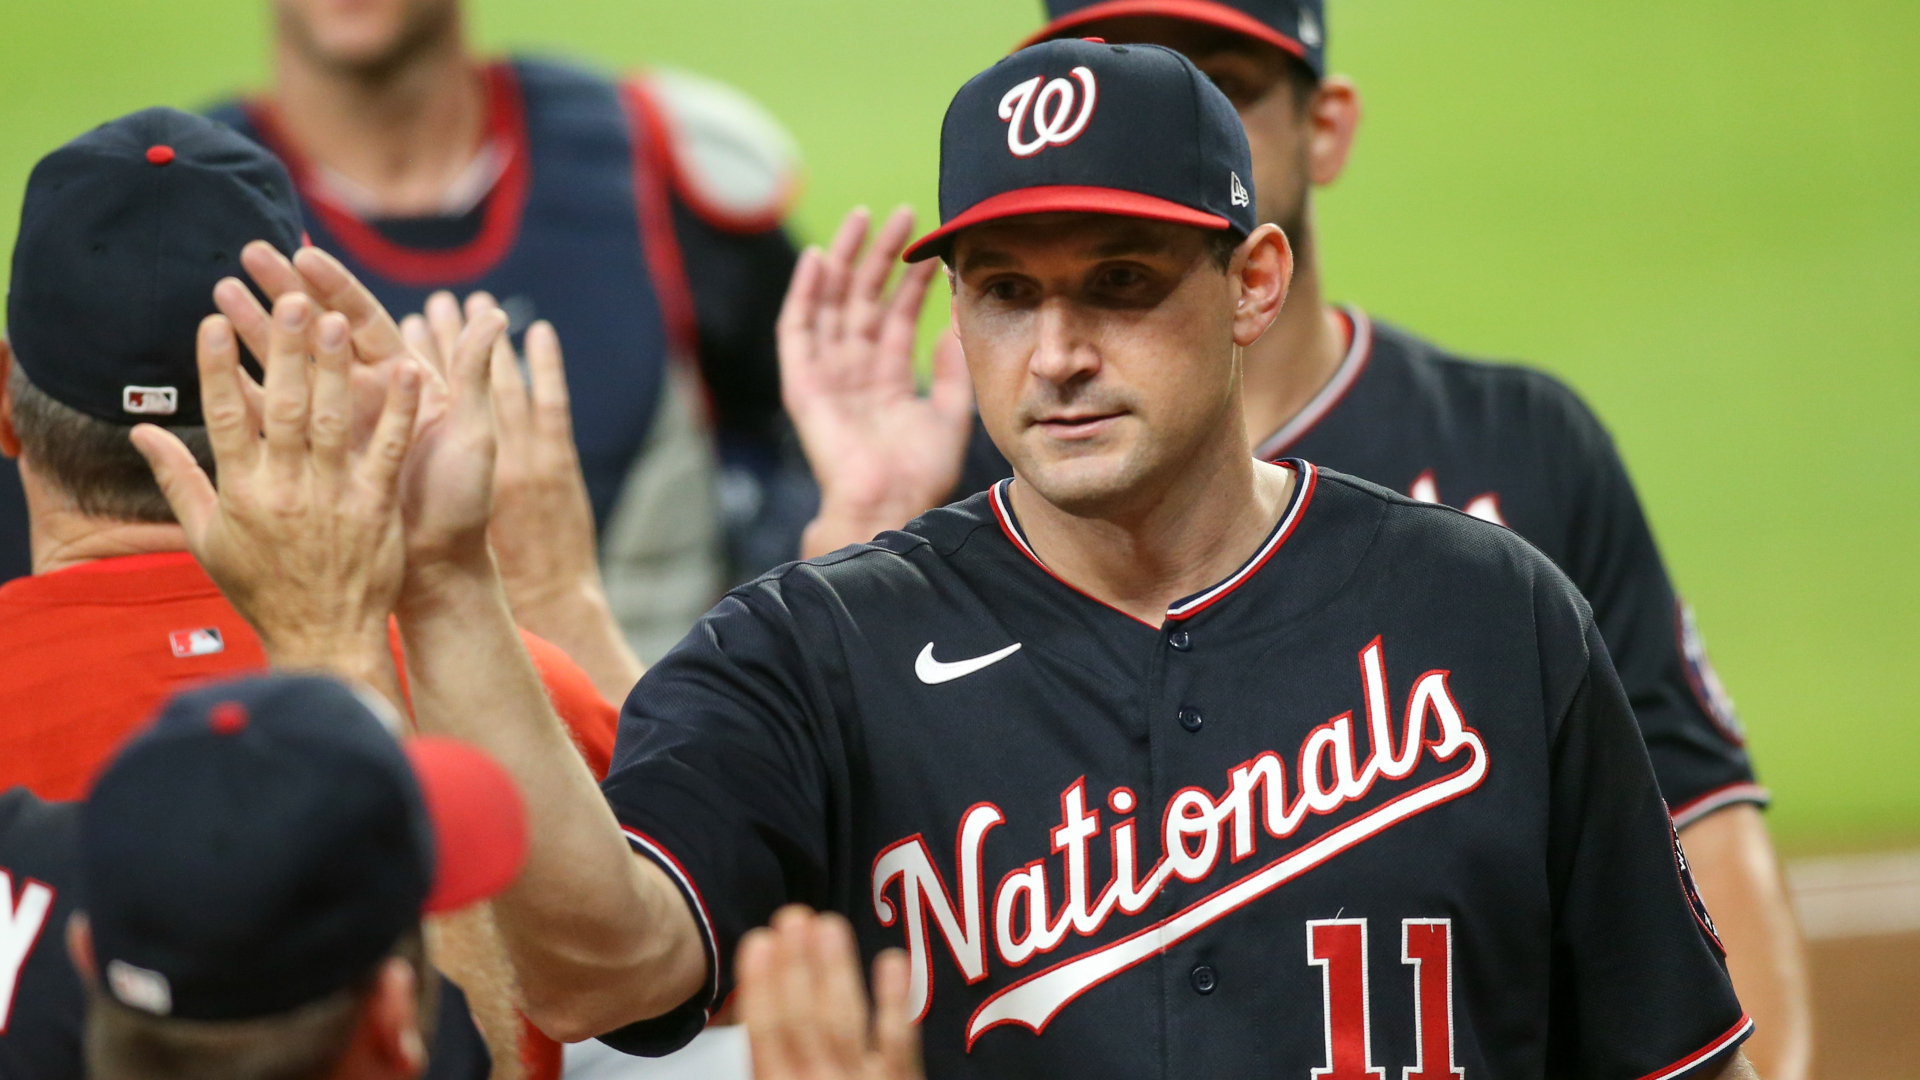 Virginia baseball to retire Ryan Zimmerman's No. 11 jersey